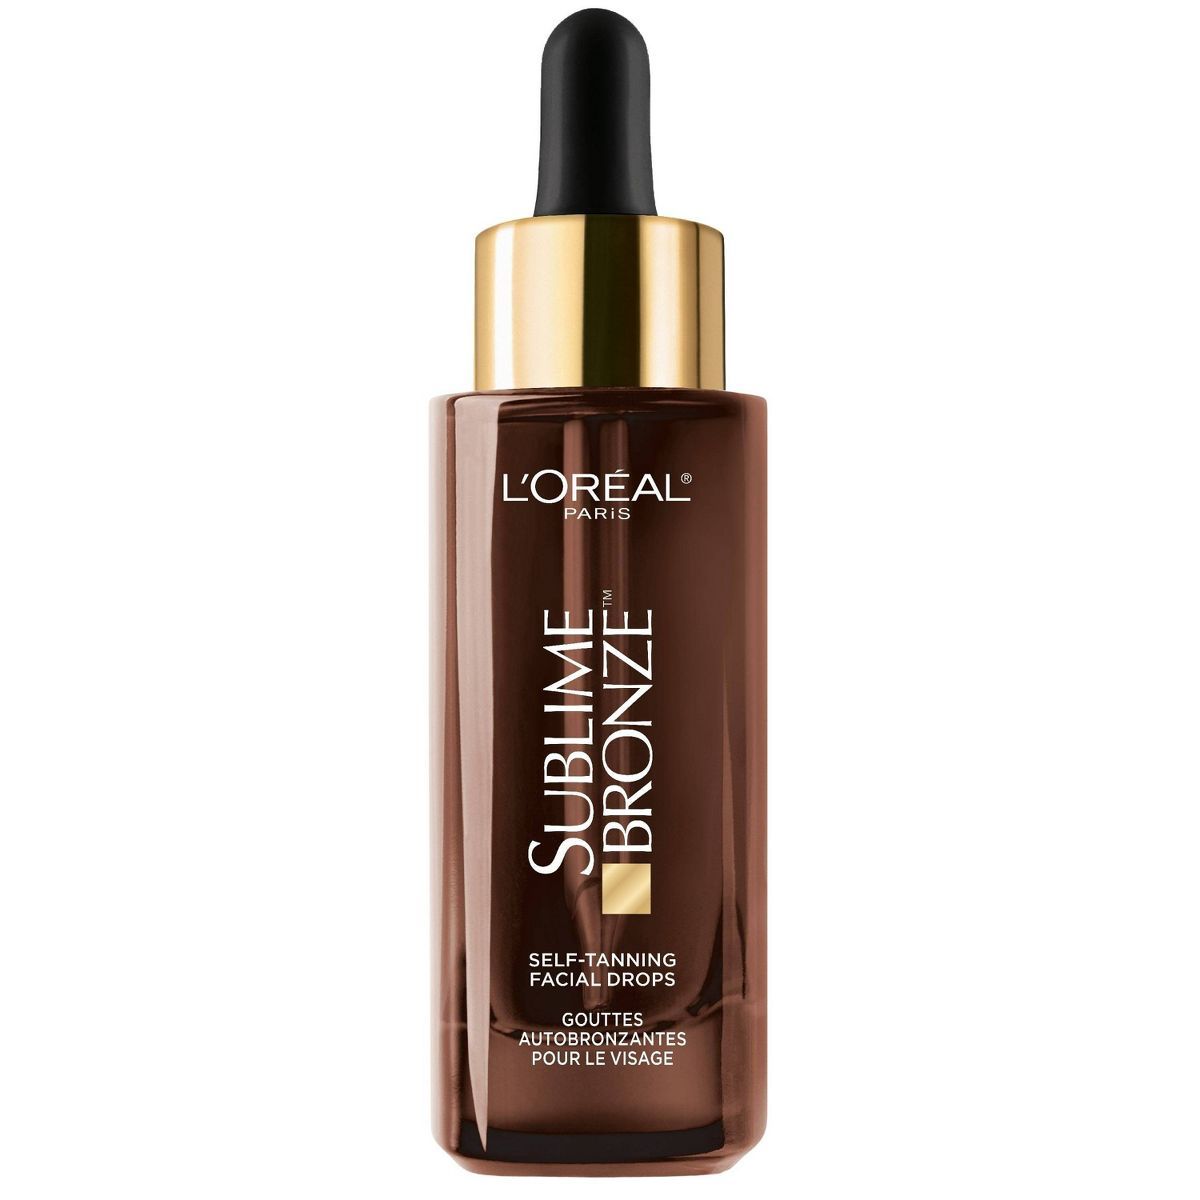 L'Oreal Paris Sublime Bronze Self-Tanning Facial Drops Fragrance-Free - 1 fl oz | Target